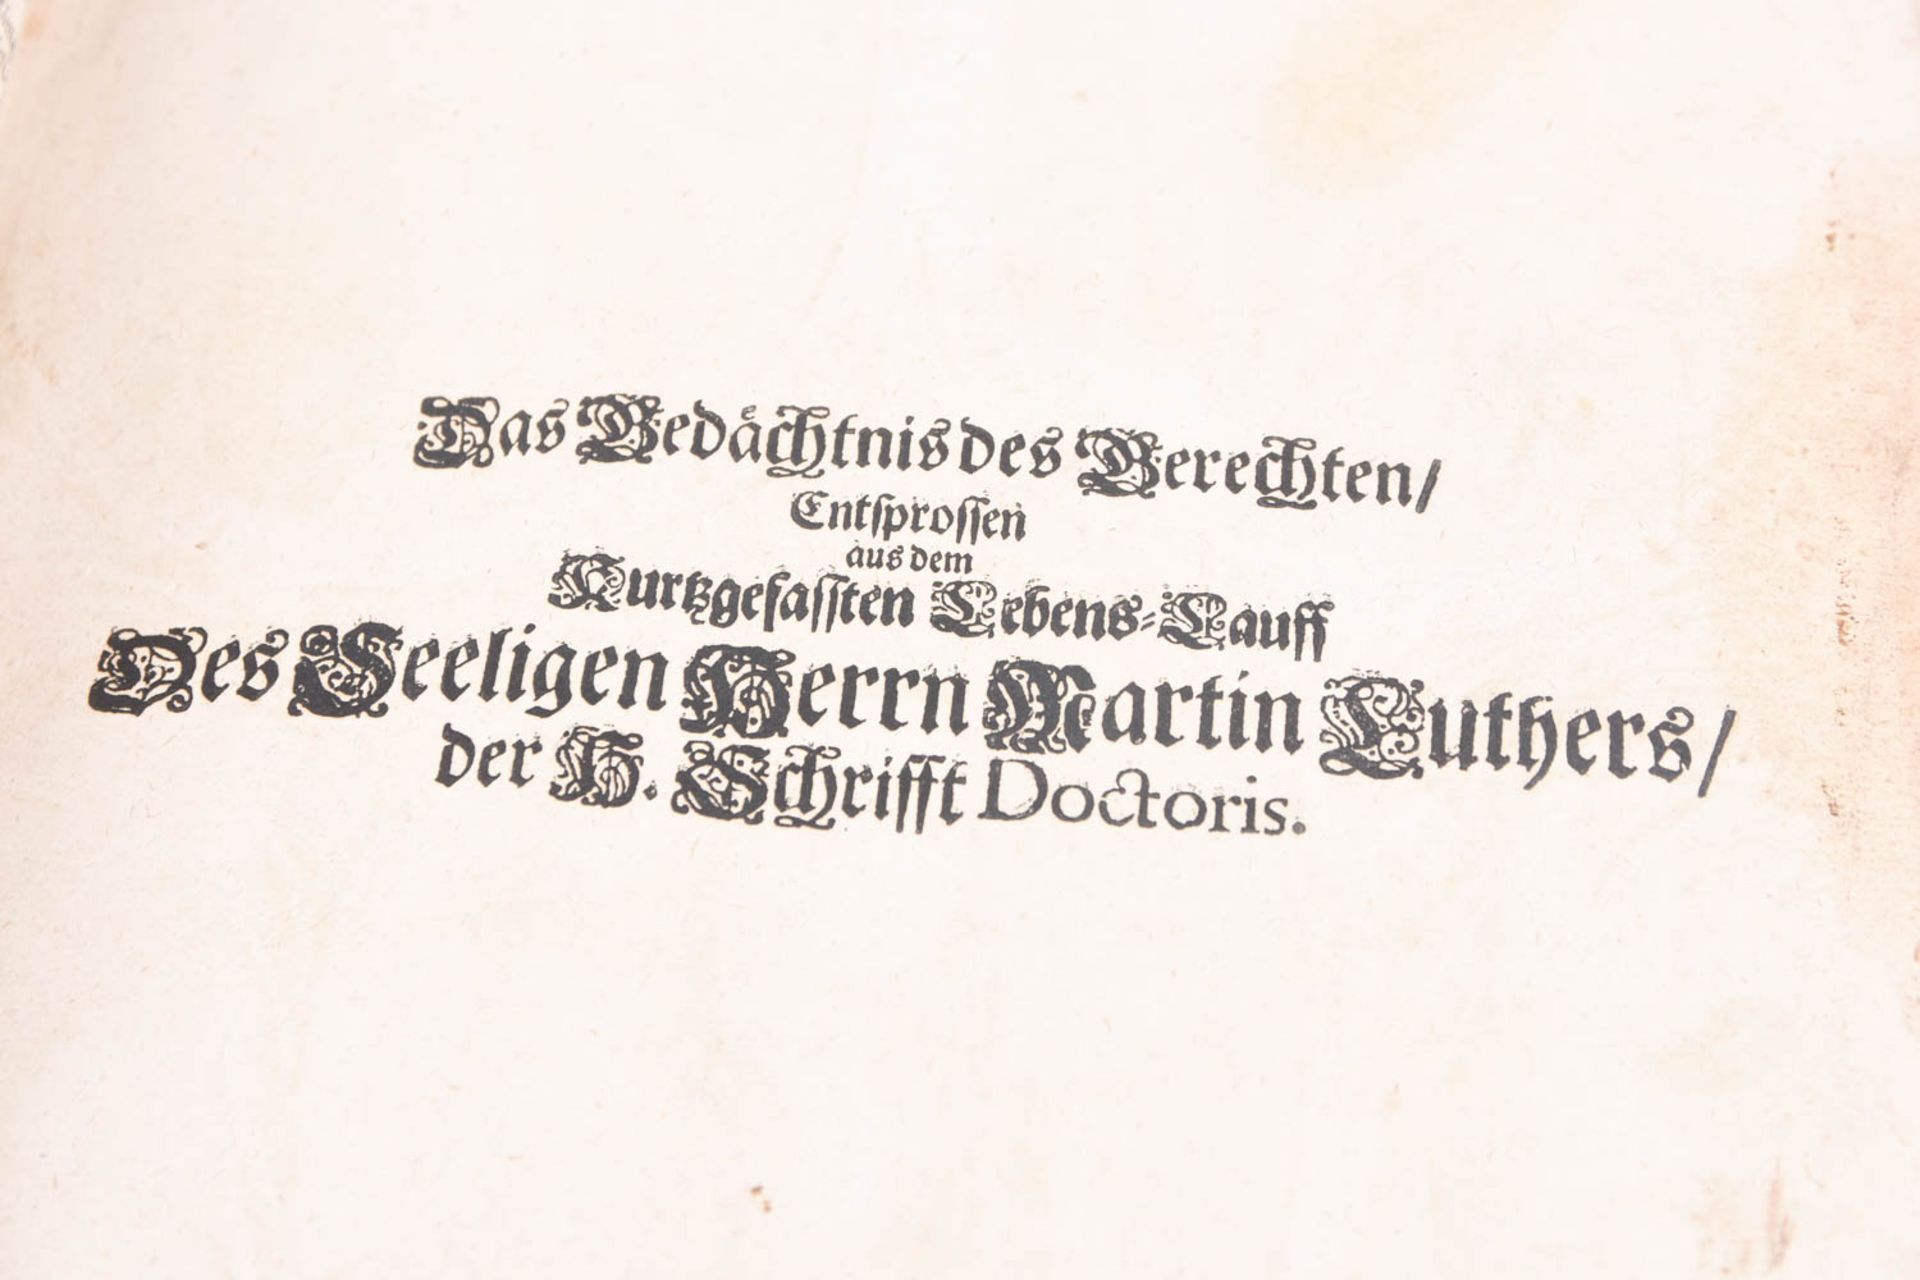 Luther Bibel, 1728 - Image 14 of 30